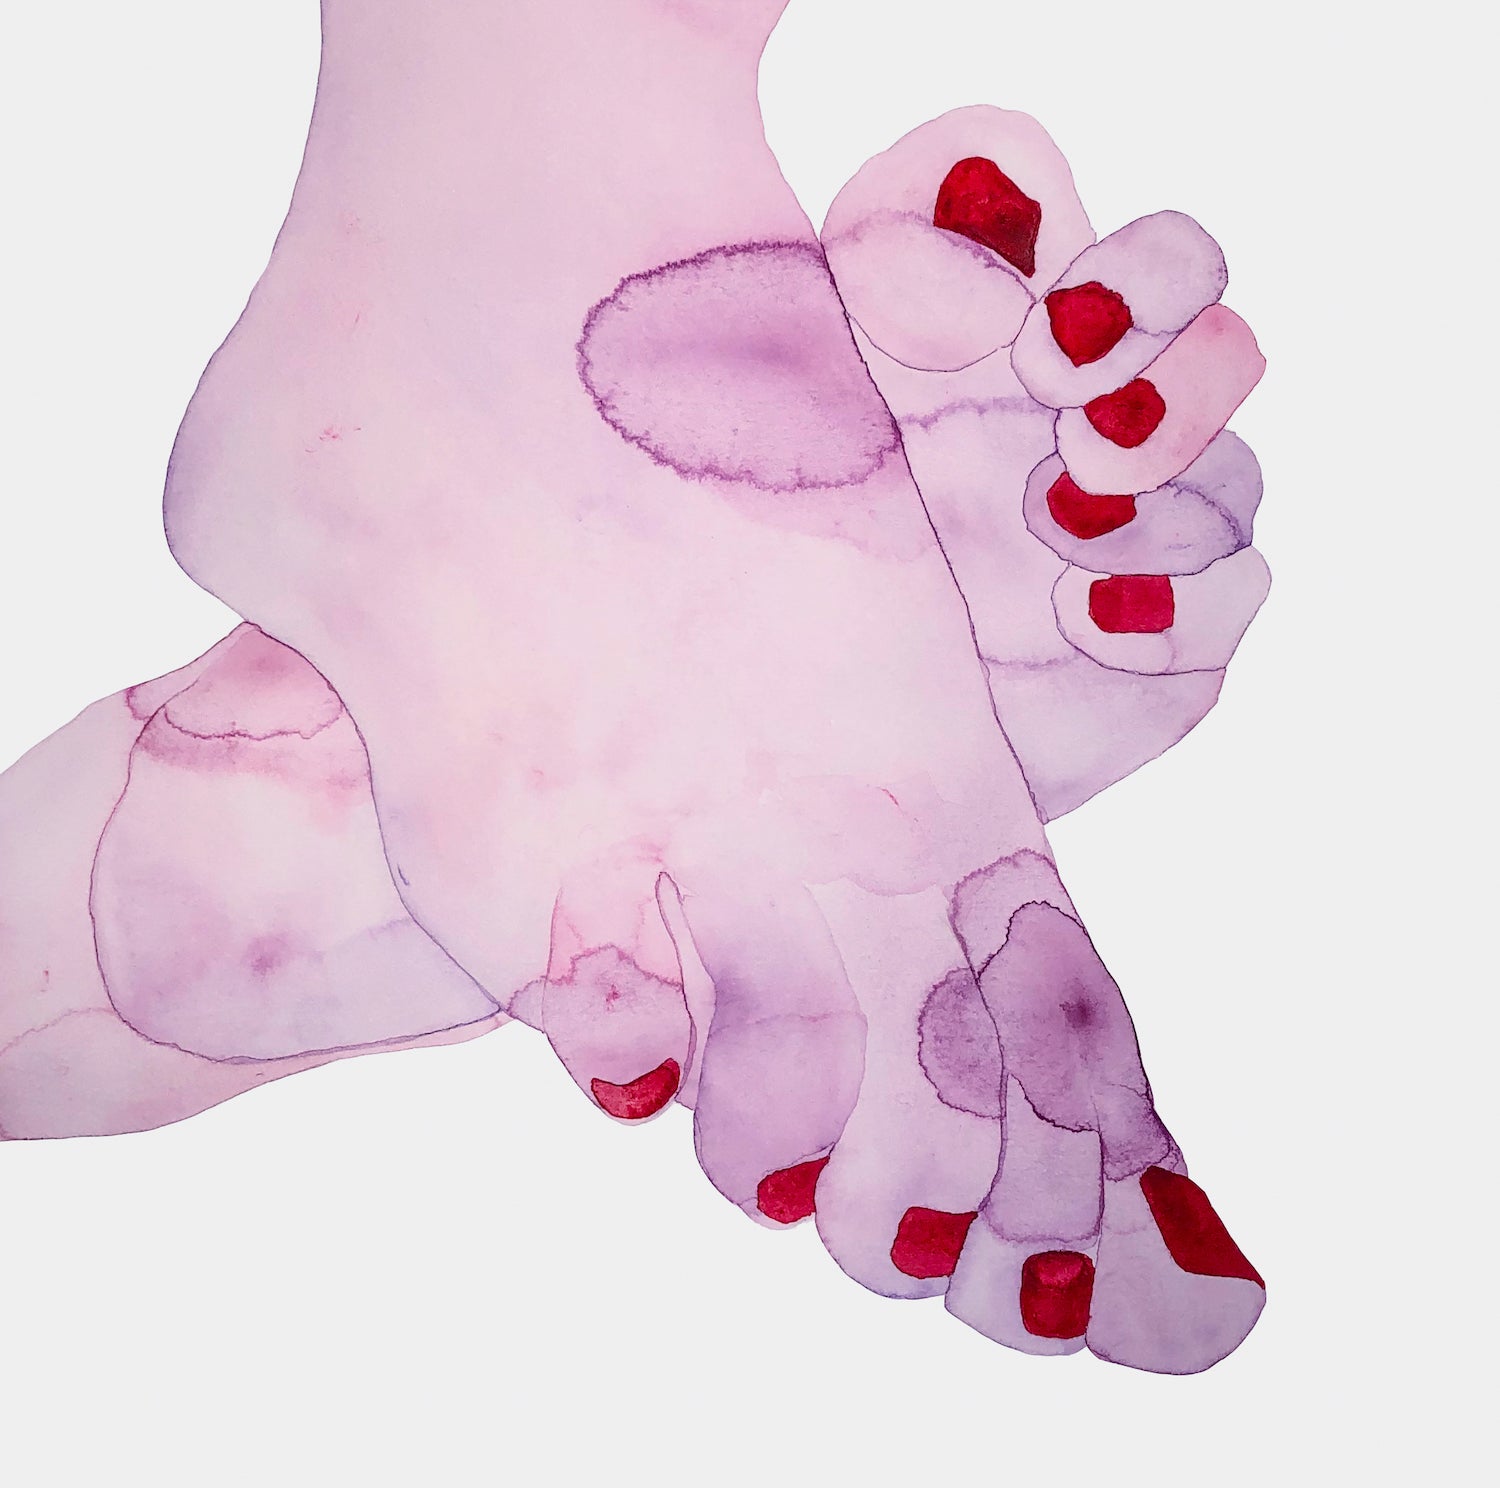 Helena Calmfors "Foot Fetish/Study of Feet PT II"